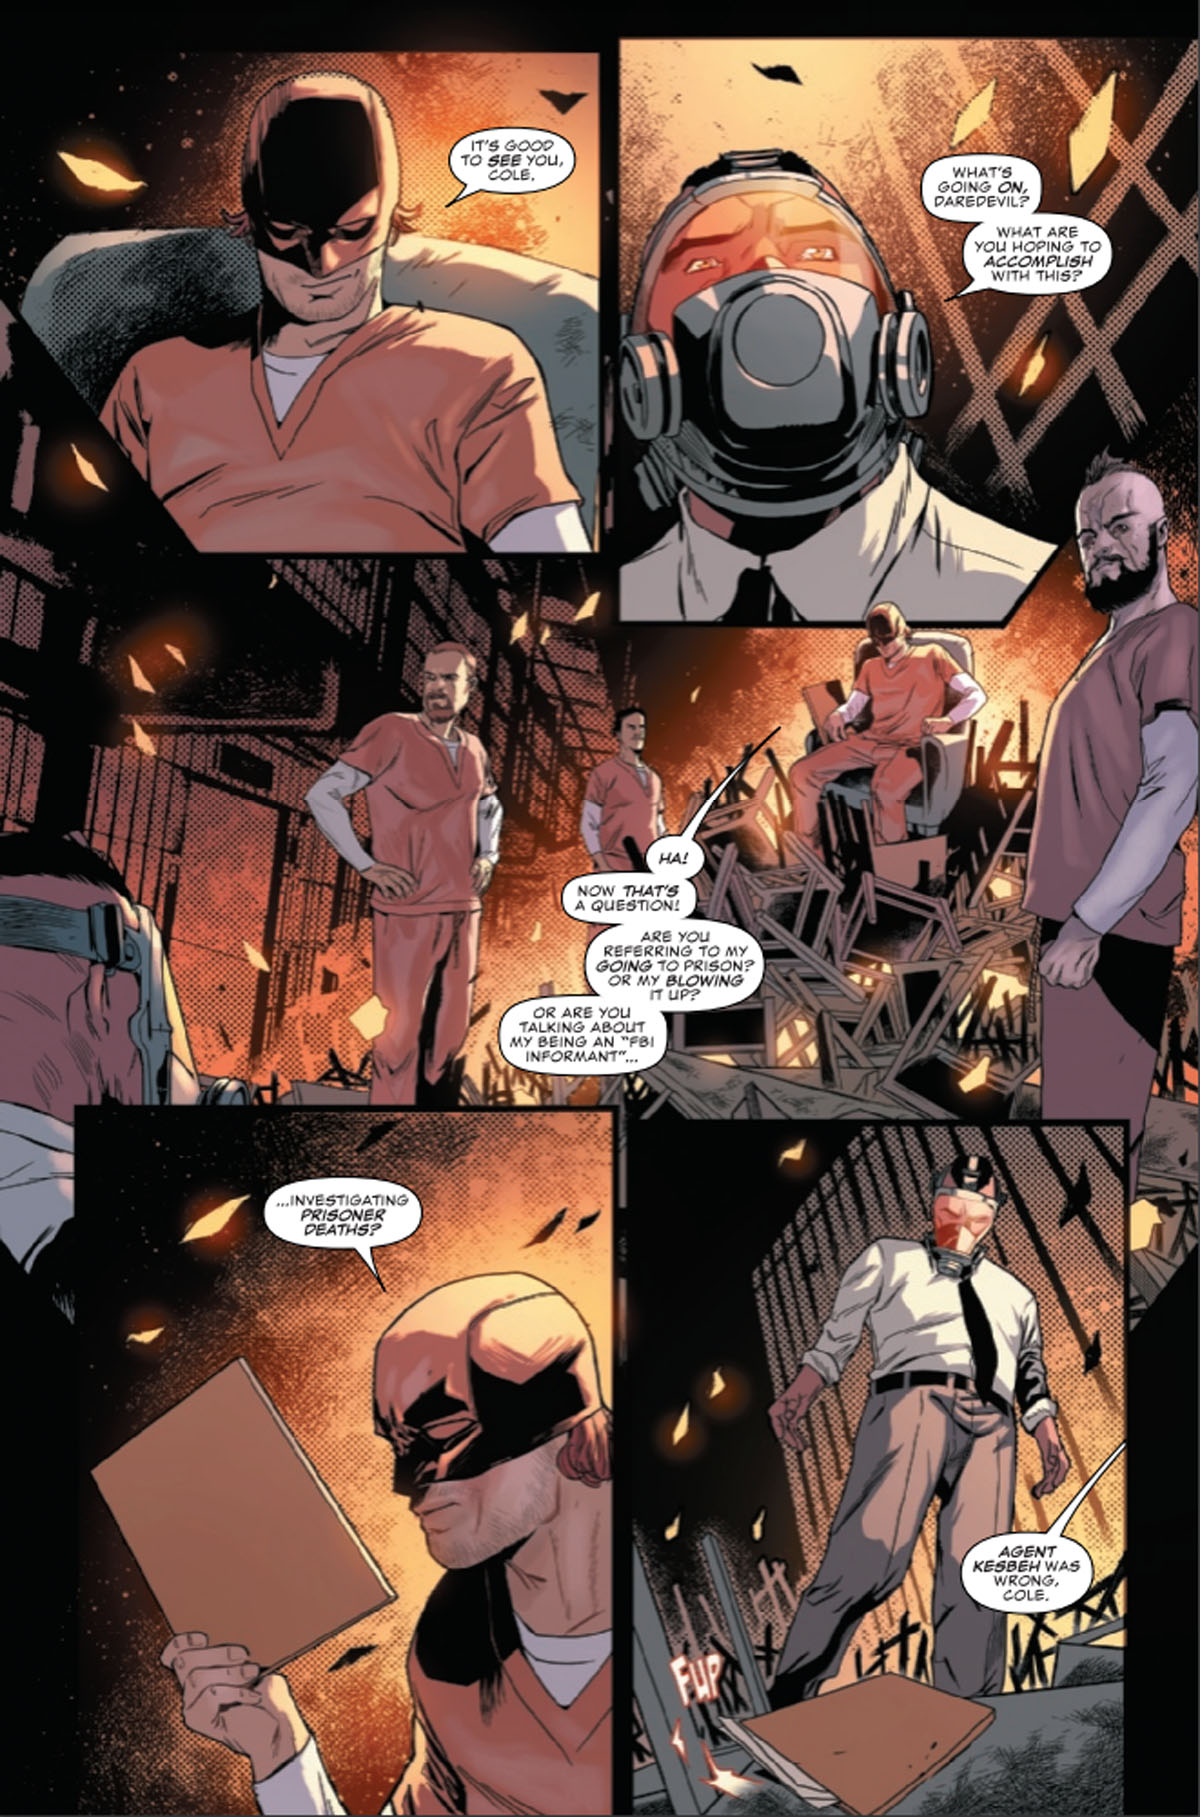 Daredevil #34 page 1